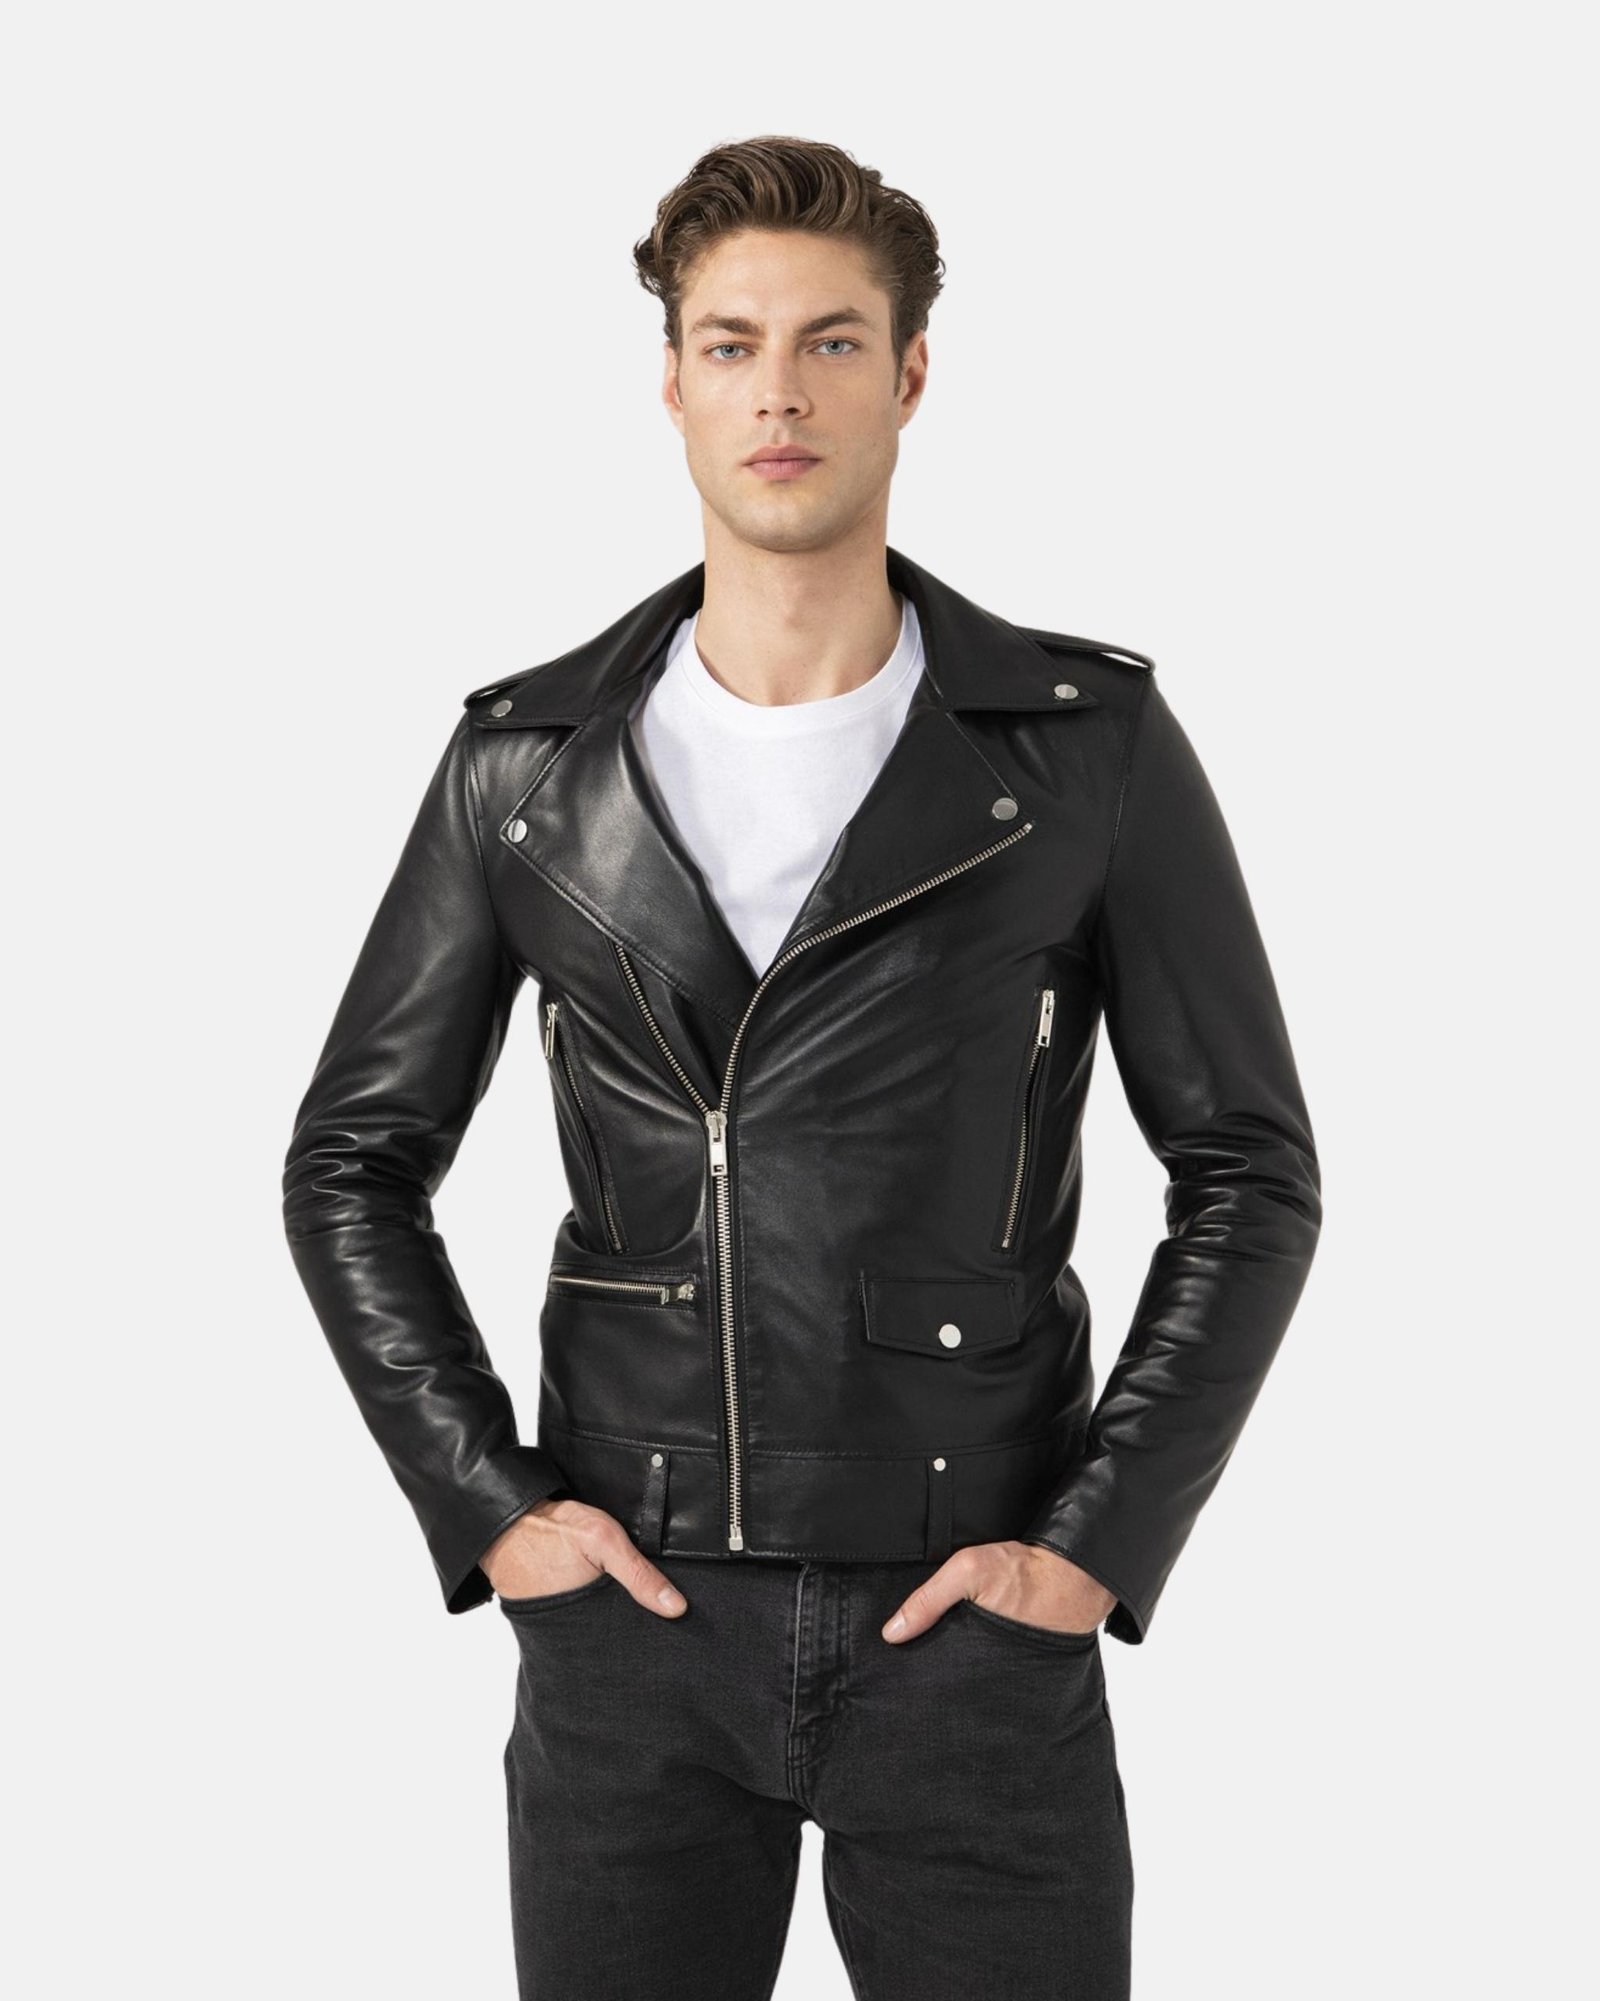 American Men Biker Leather Jacket - Leather Moto